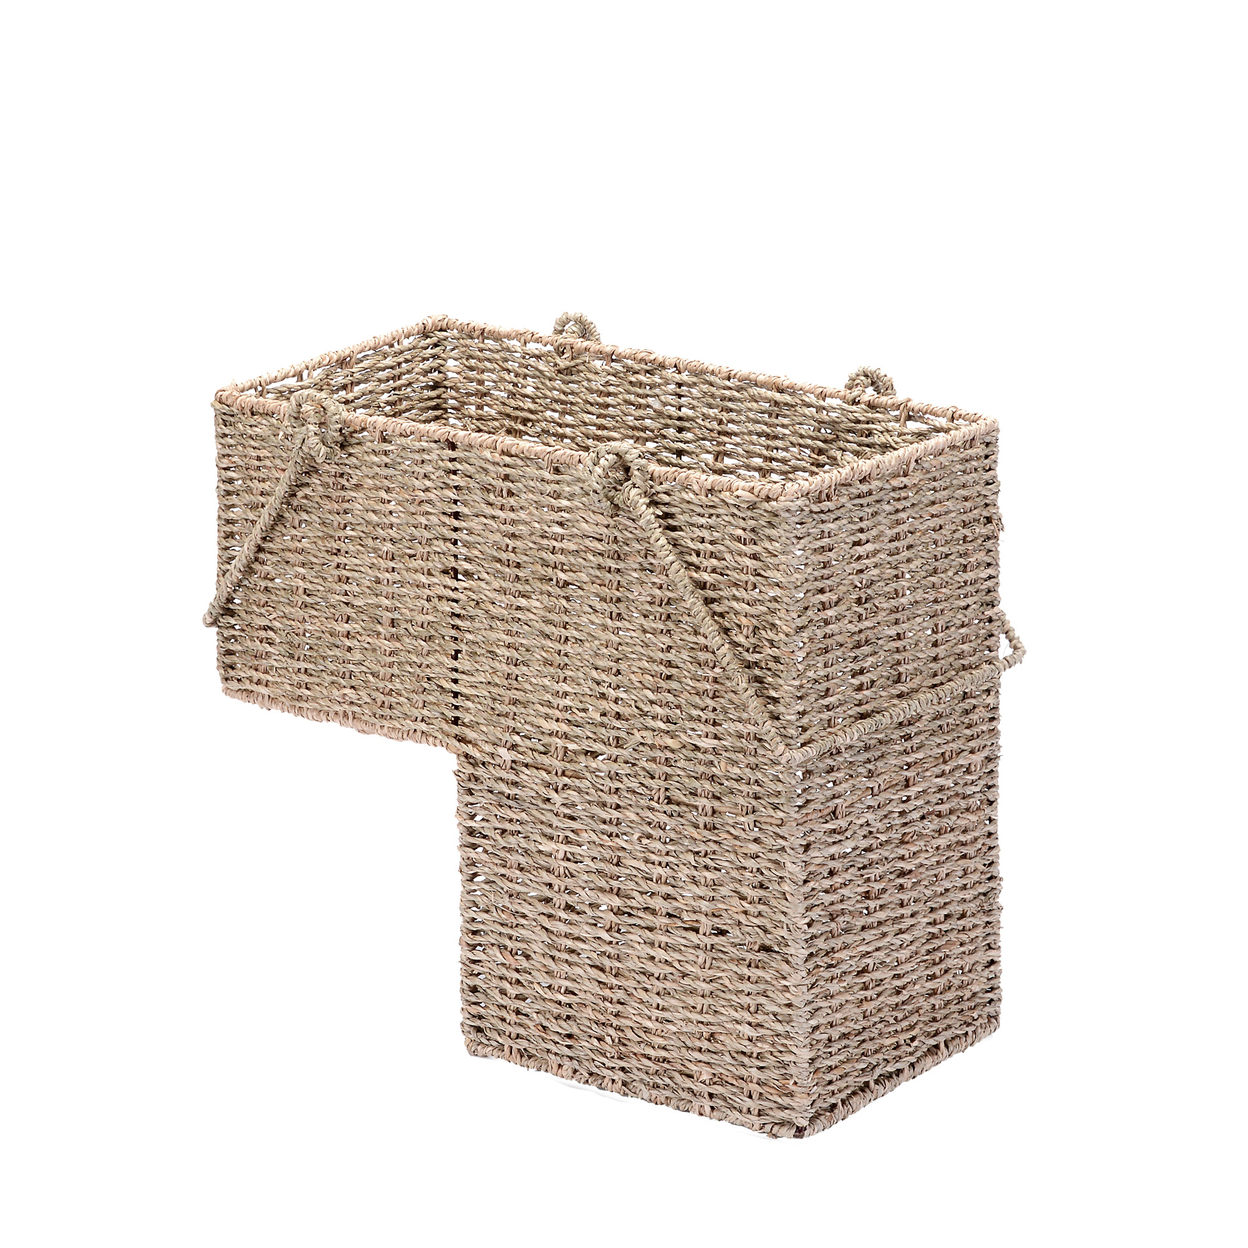 14-Inch Wicker Stair Case Basket Handmade Woven Seagrass StairStep